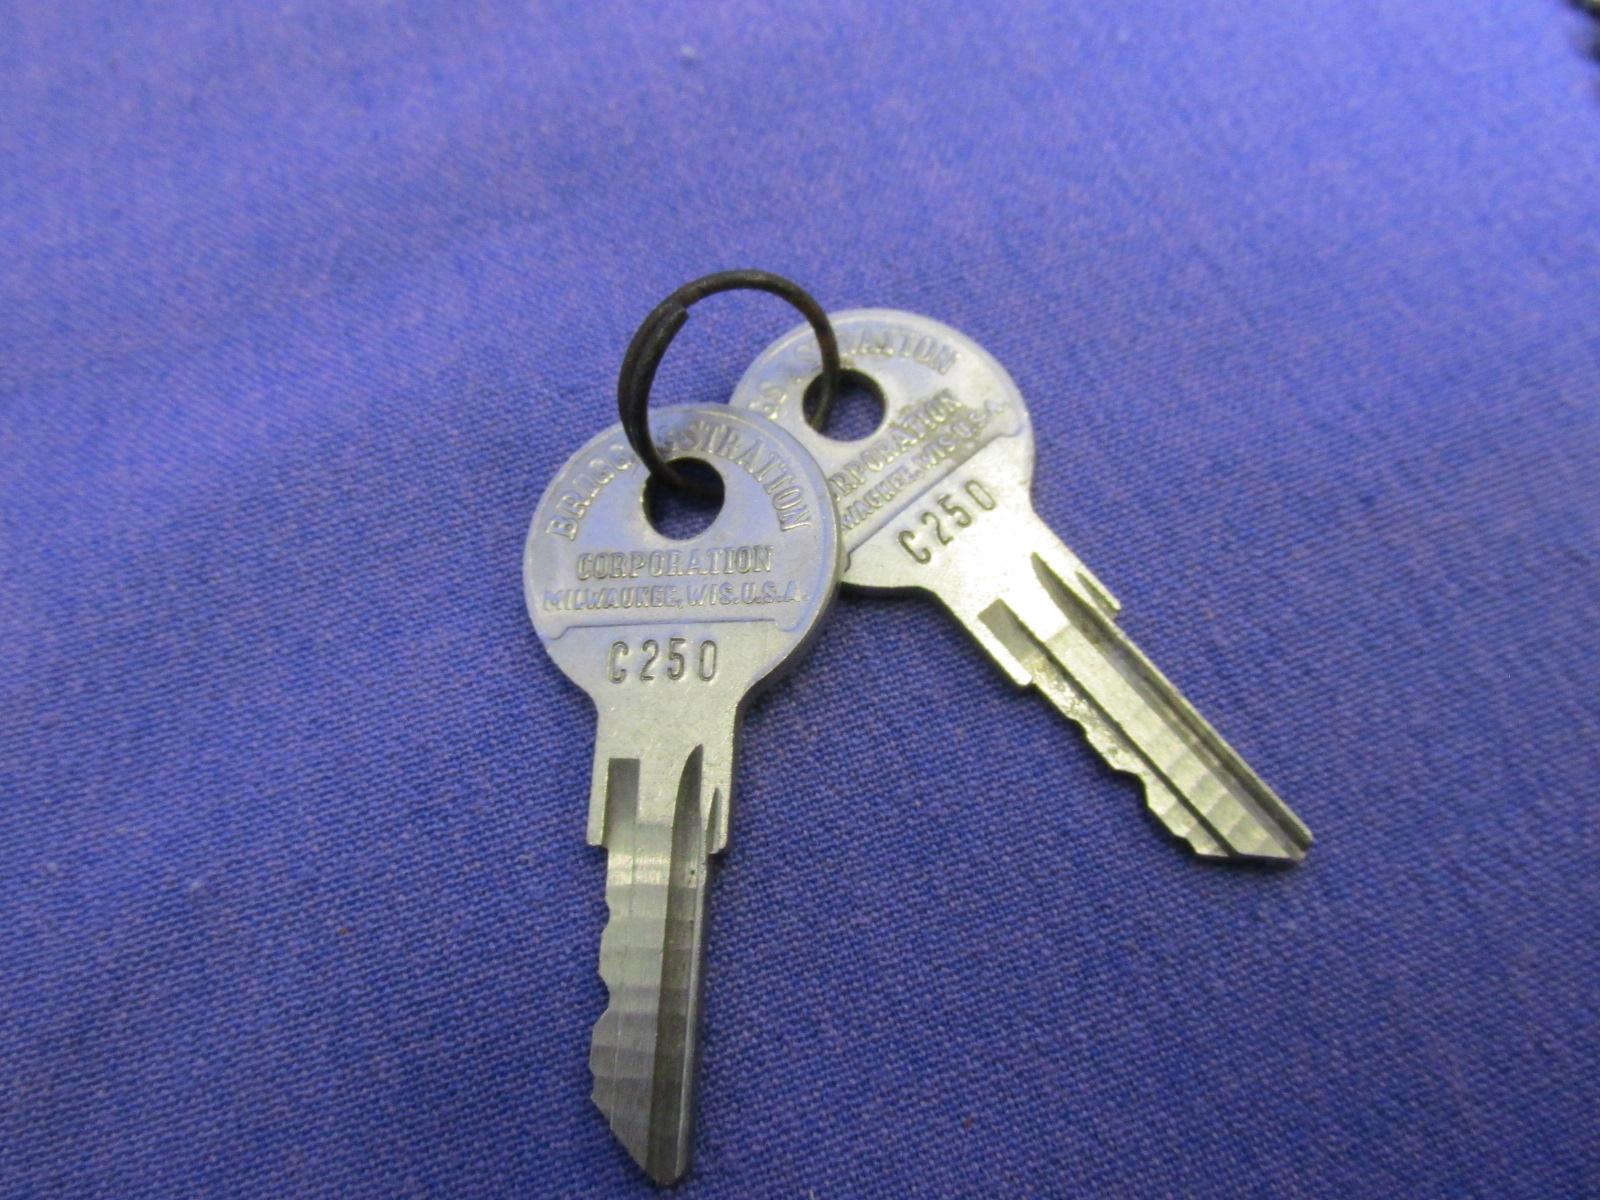 Wood Box full of various household keys & 2 padlocks – 1 Key says Ford Mustang